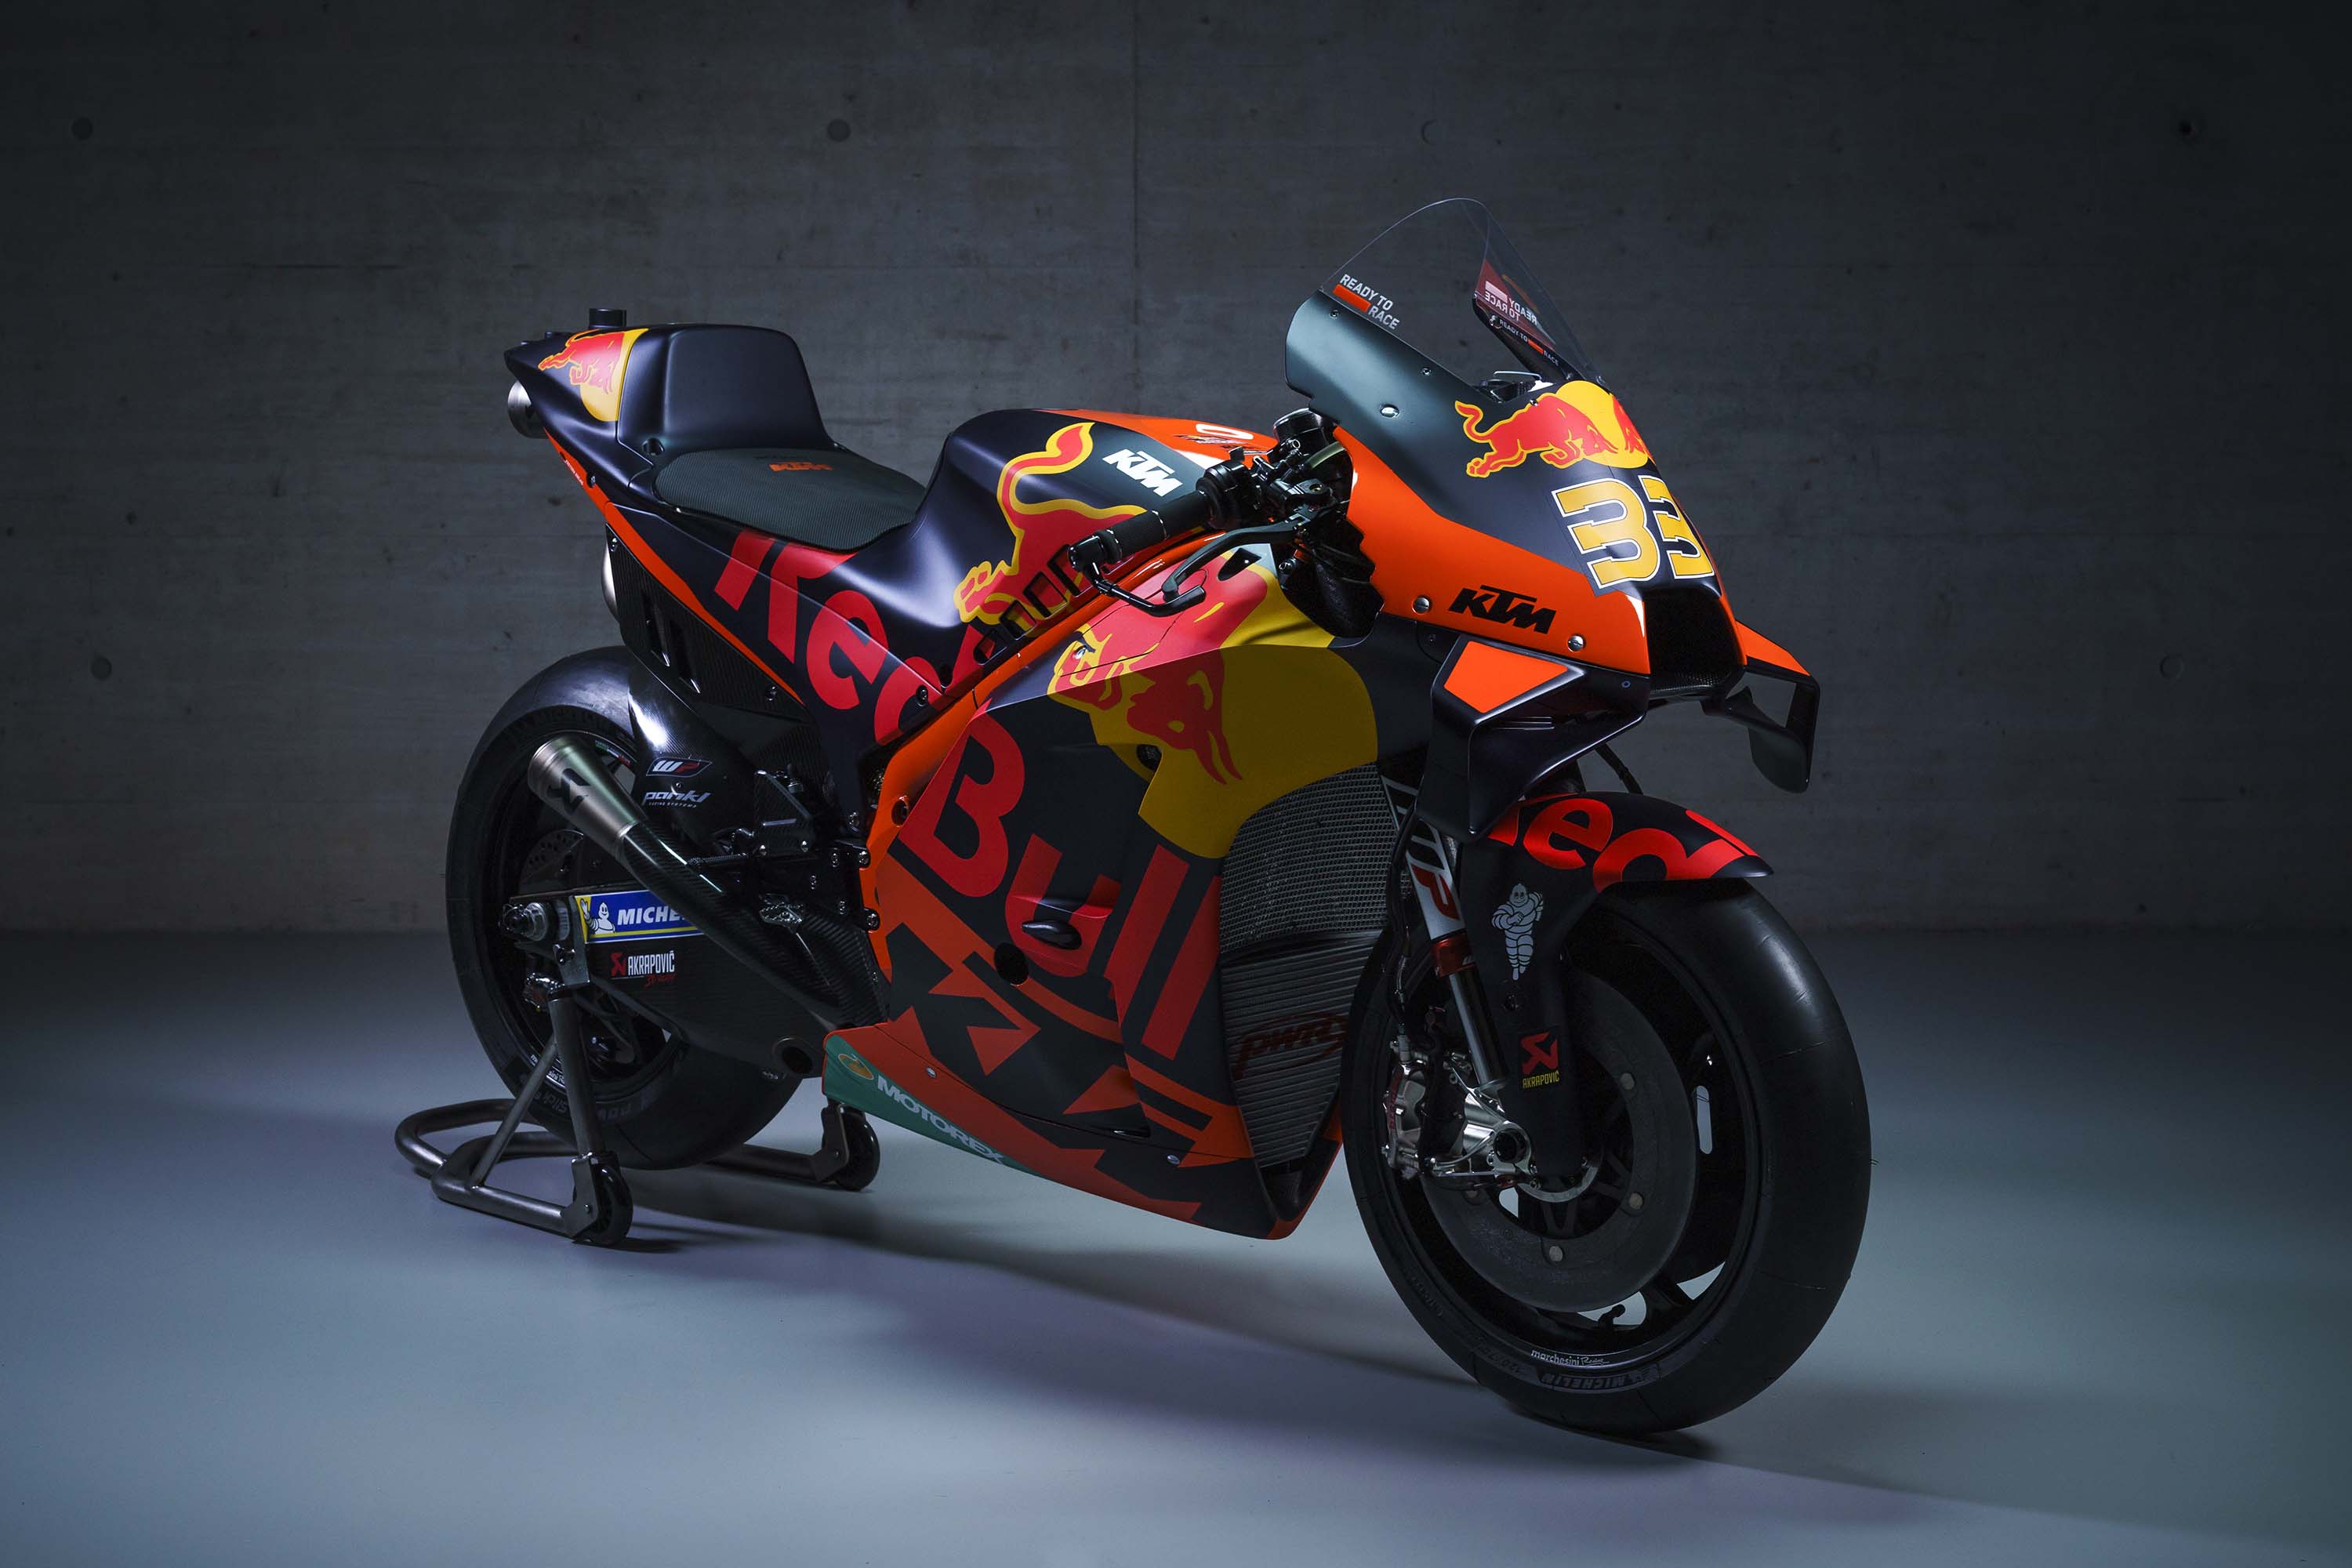 Ktm Motogp 2021 Wallpaper, First Look Red Bull Ktm S 2021 Motogp Livery For Binder Oliveira Motogp News - Публикаций